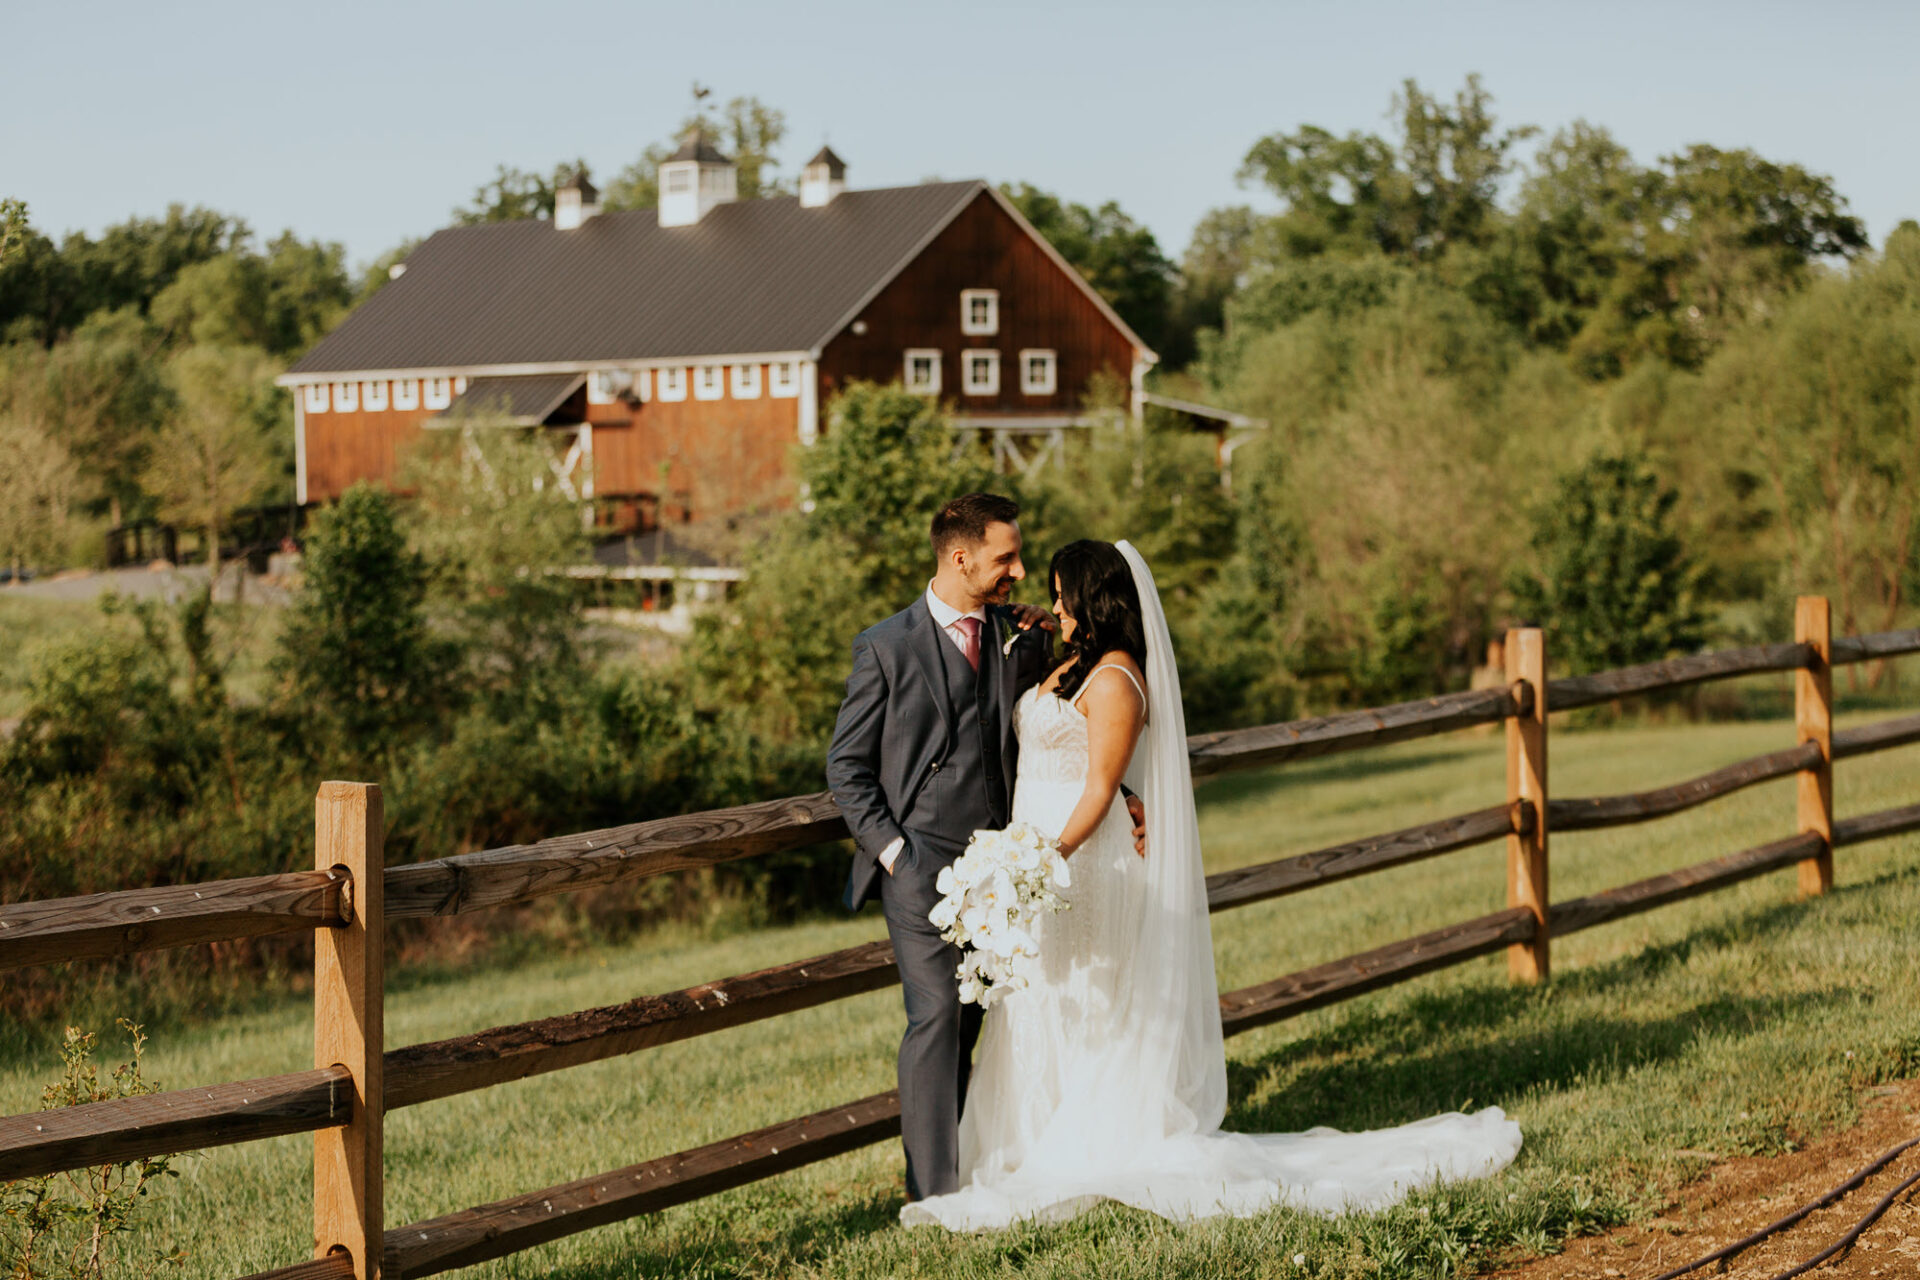 Featured image for “10 Romantic Getaway Wedding Venues in Northern Virginia”